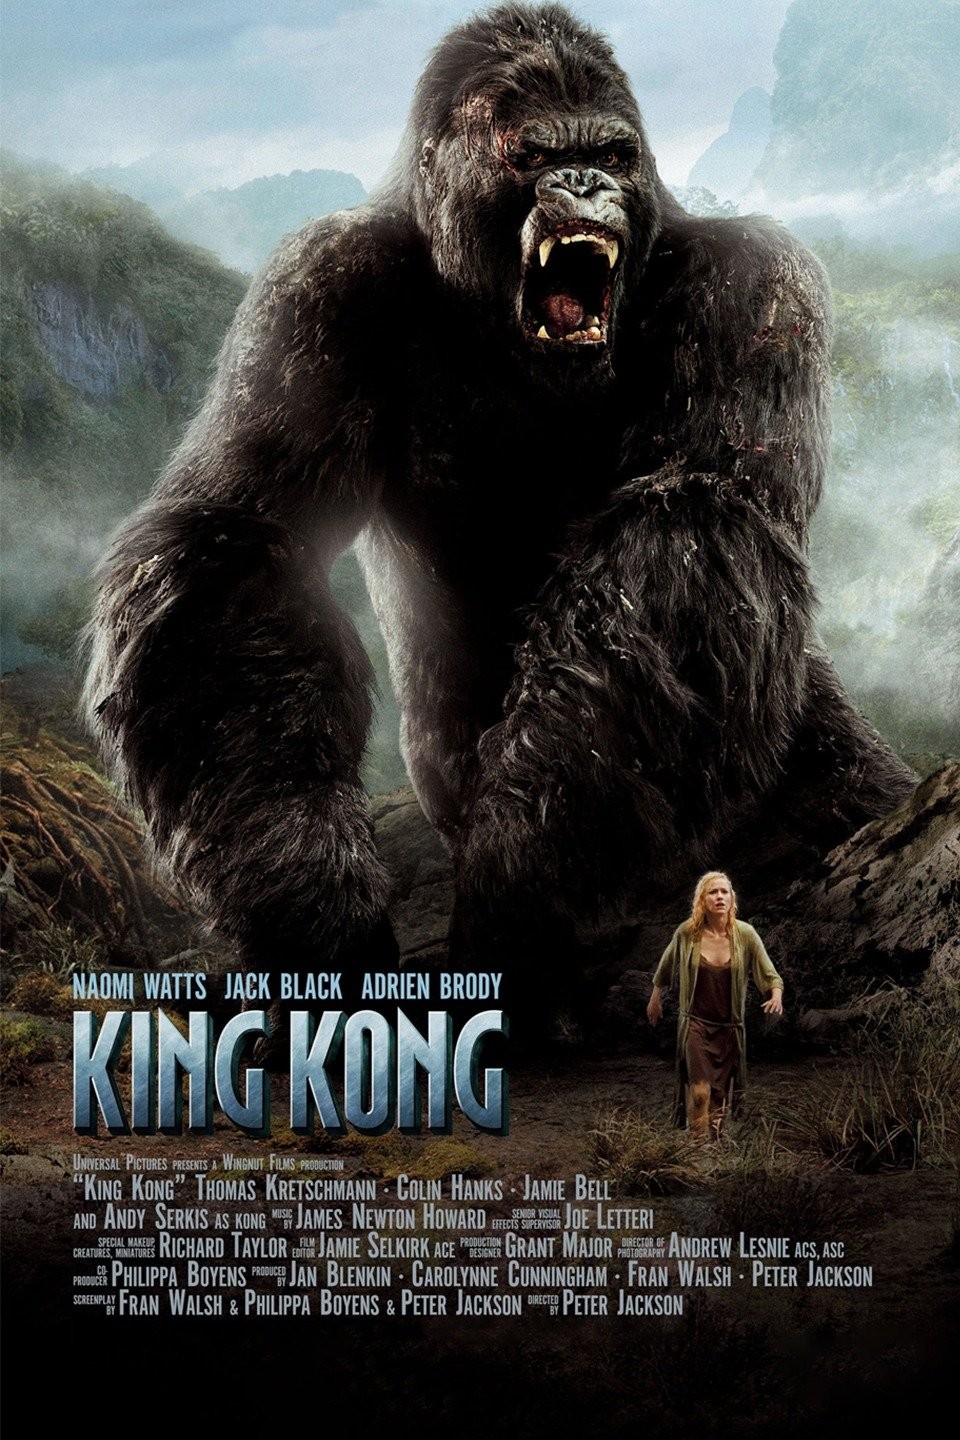 Review: Kong: A Ilha da Caveira